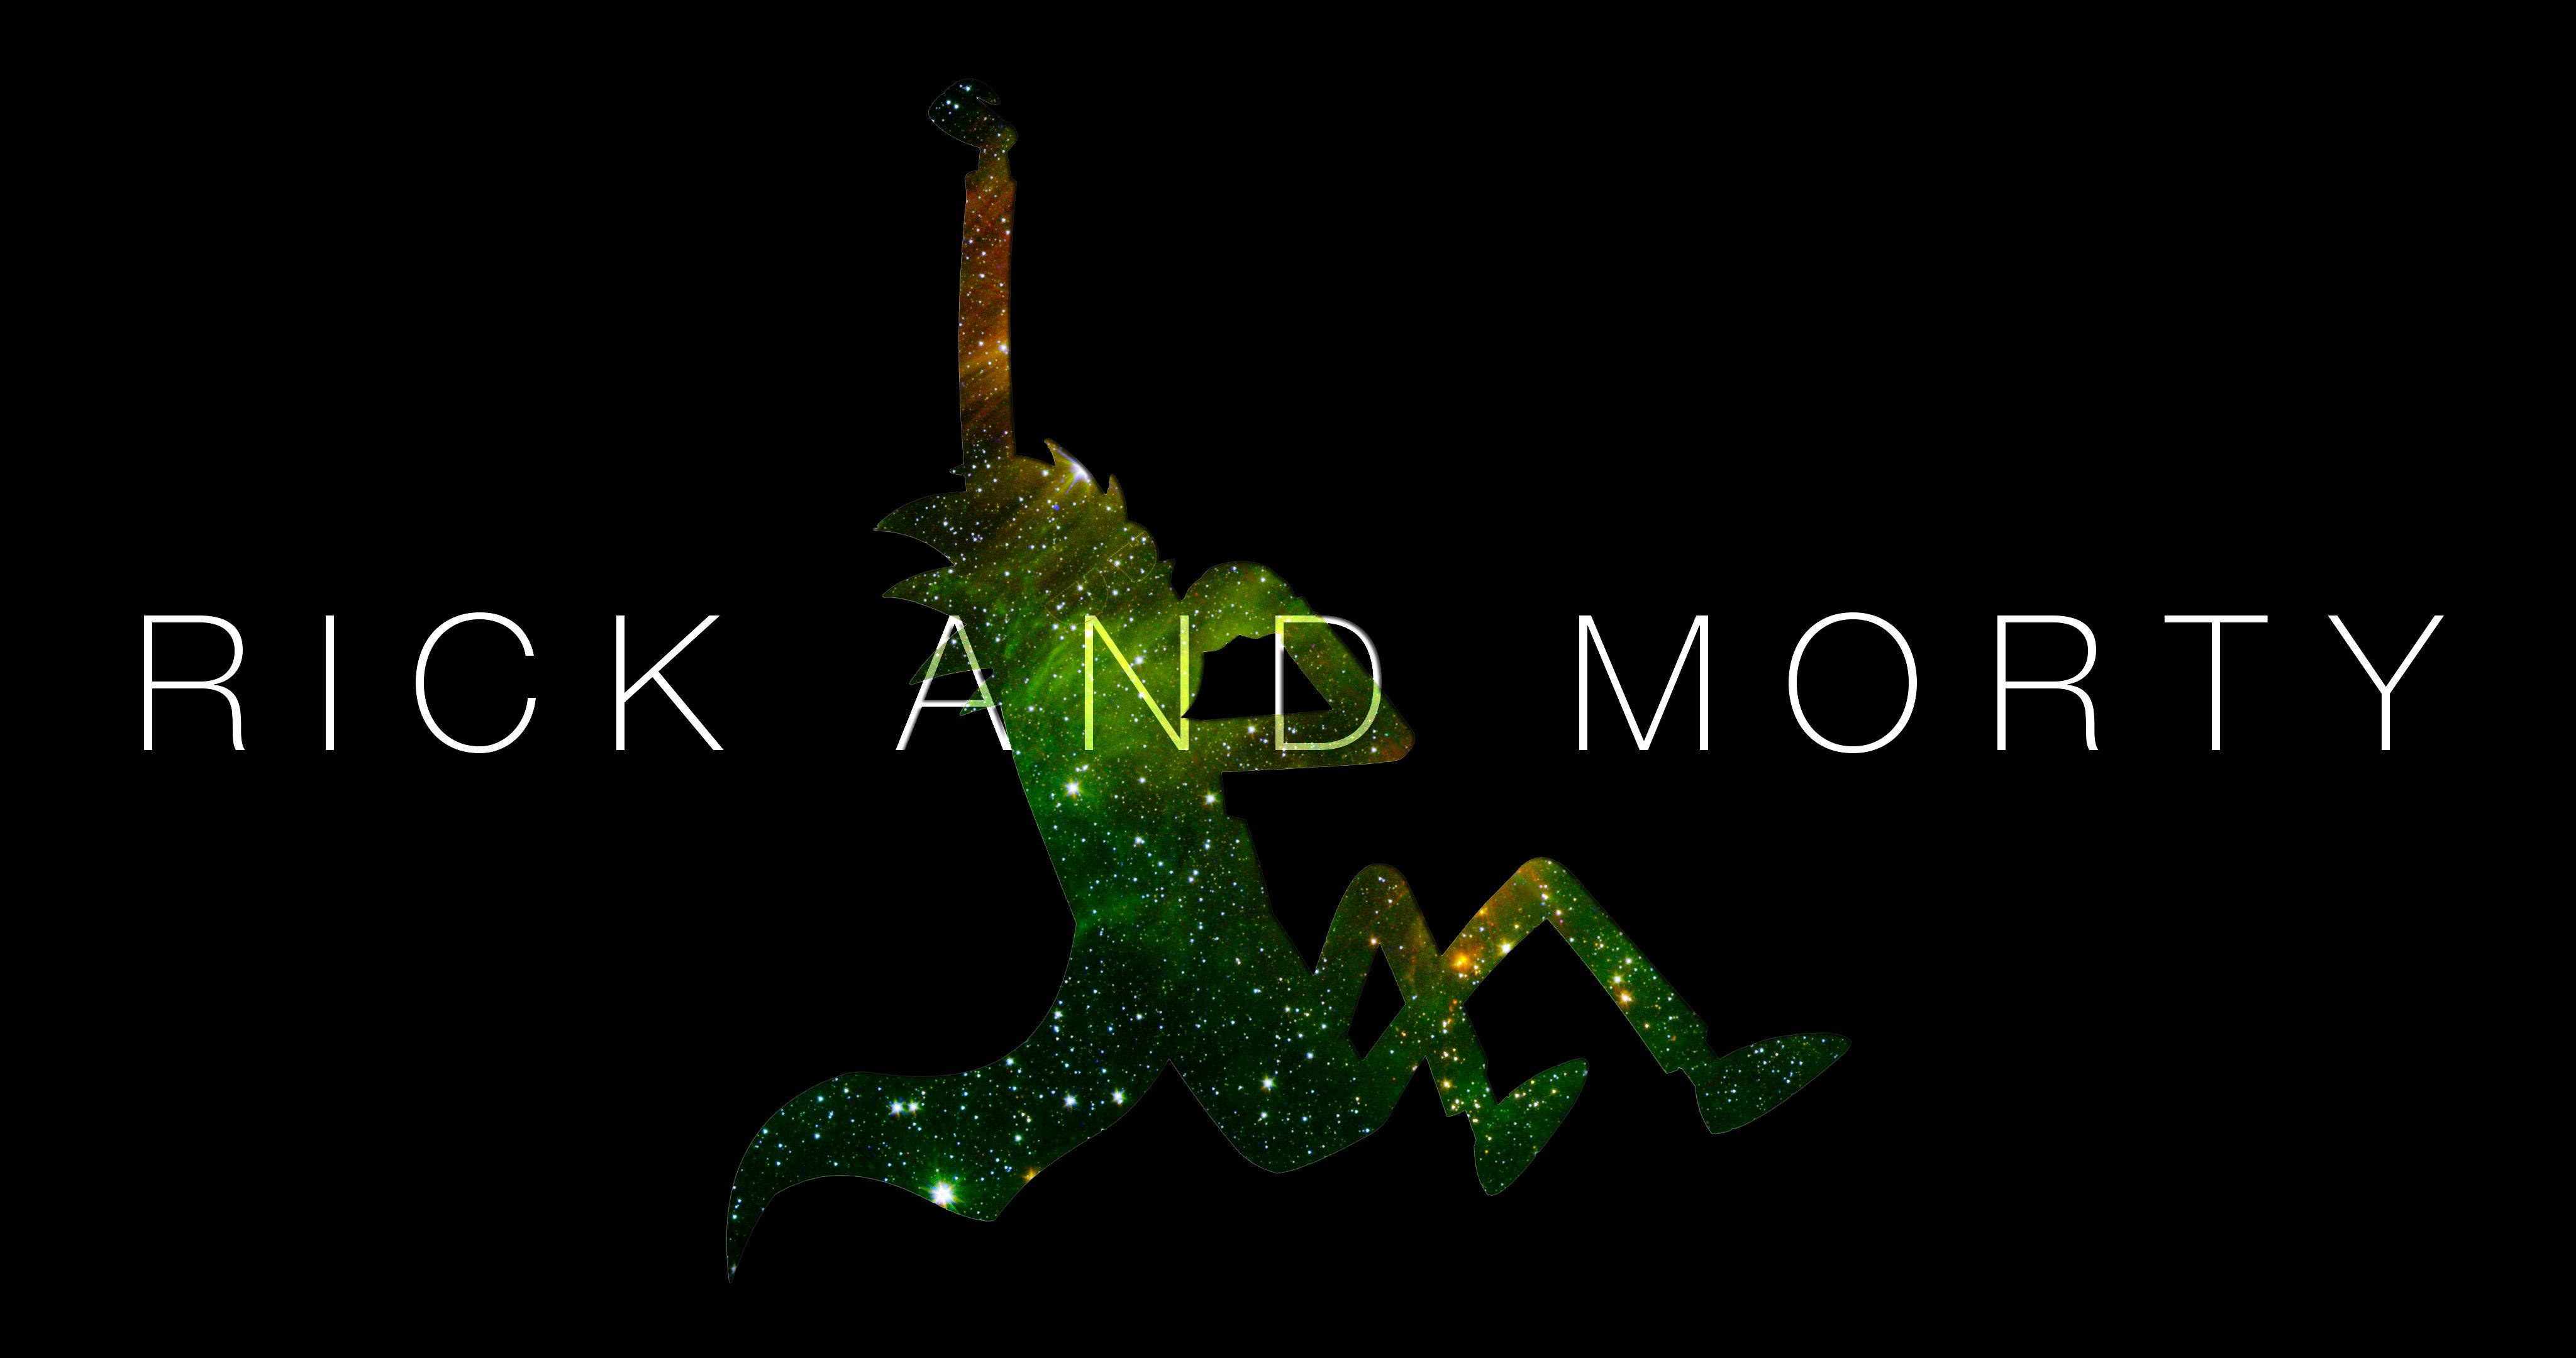 Download Black Minimalist Rick And Morty 4k Wallpaper 